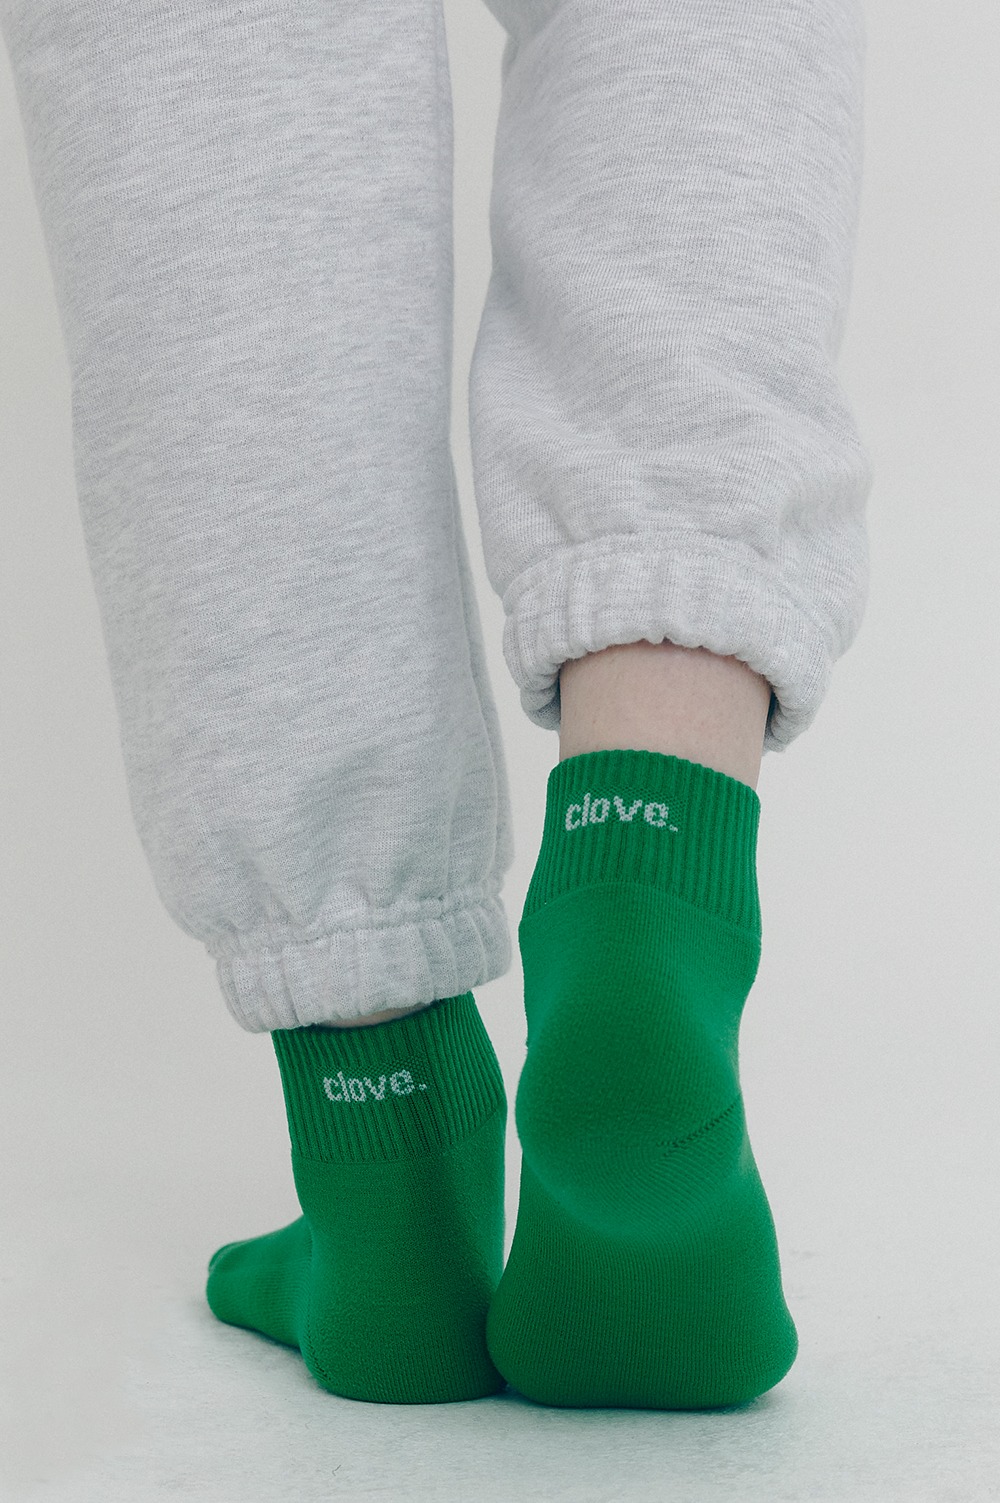 clove - [SS21 clove] Aqua Socks 3PCS Multi Color